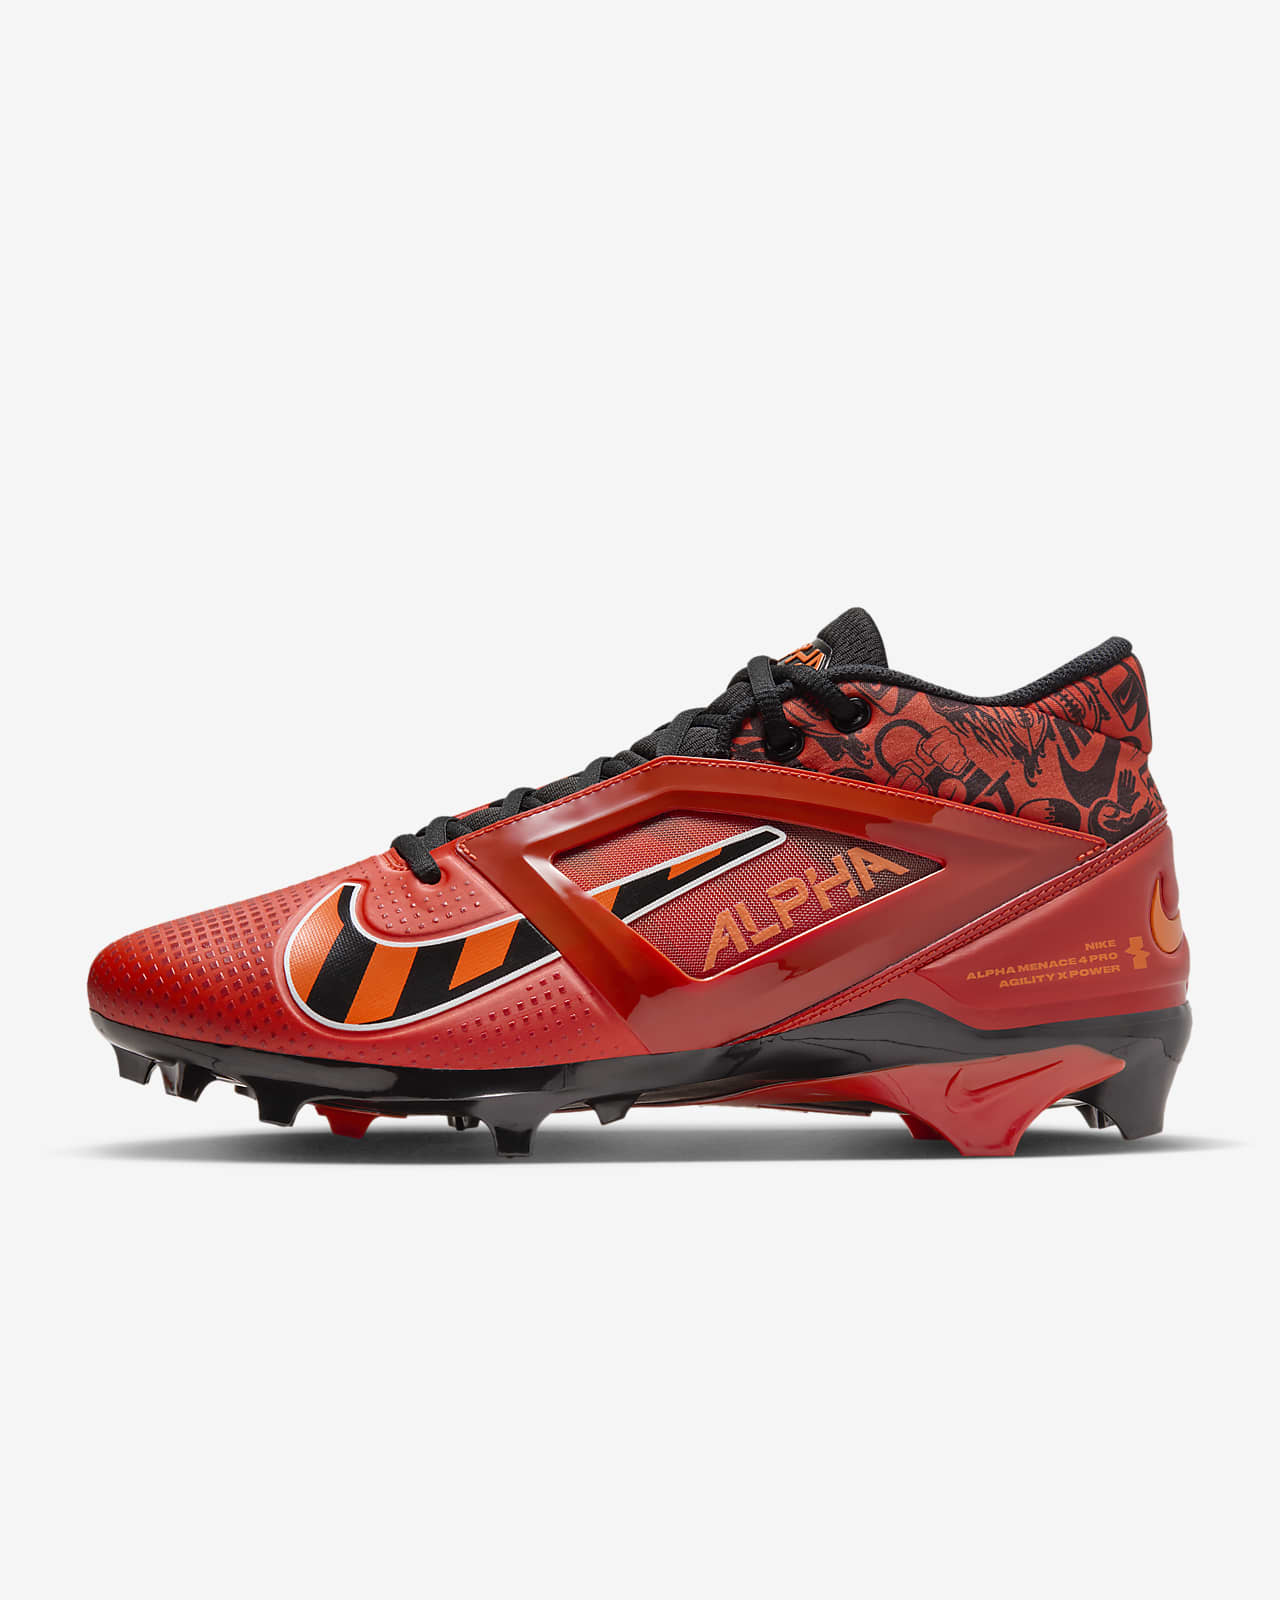 Calzado de fútbol americano Nike Alpha Menace Pro 4 NRG